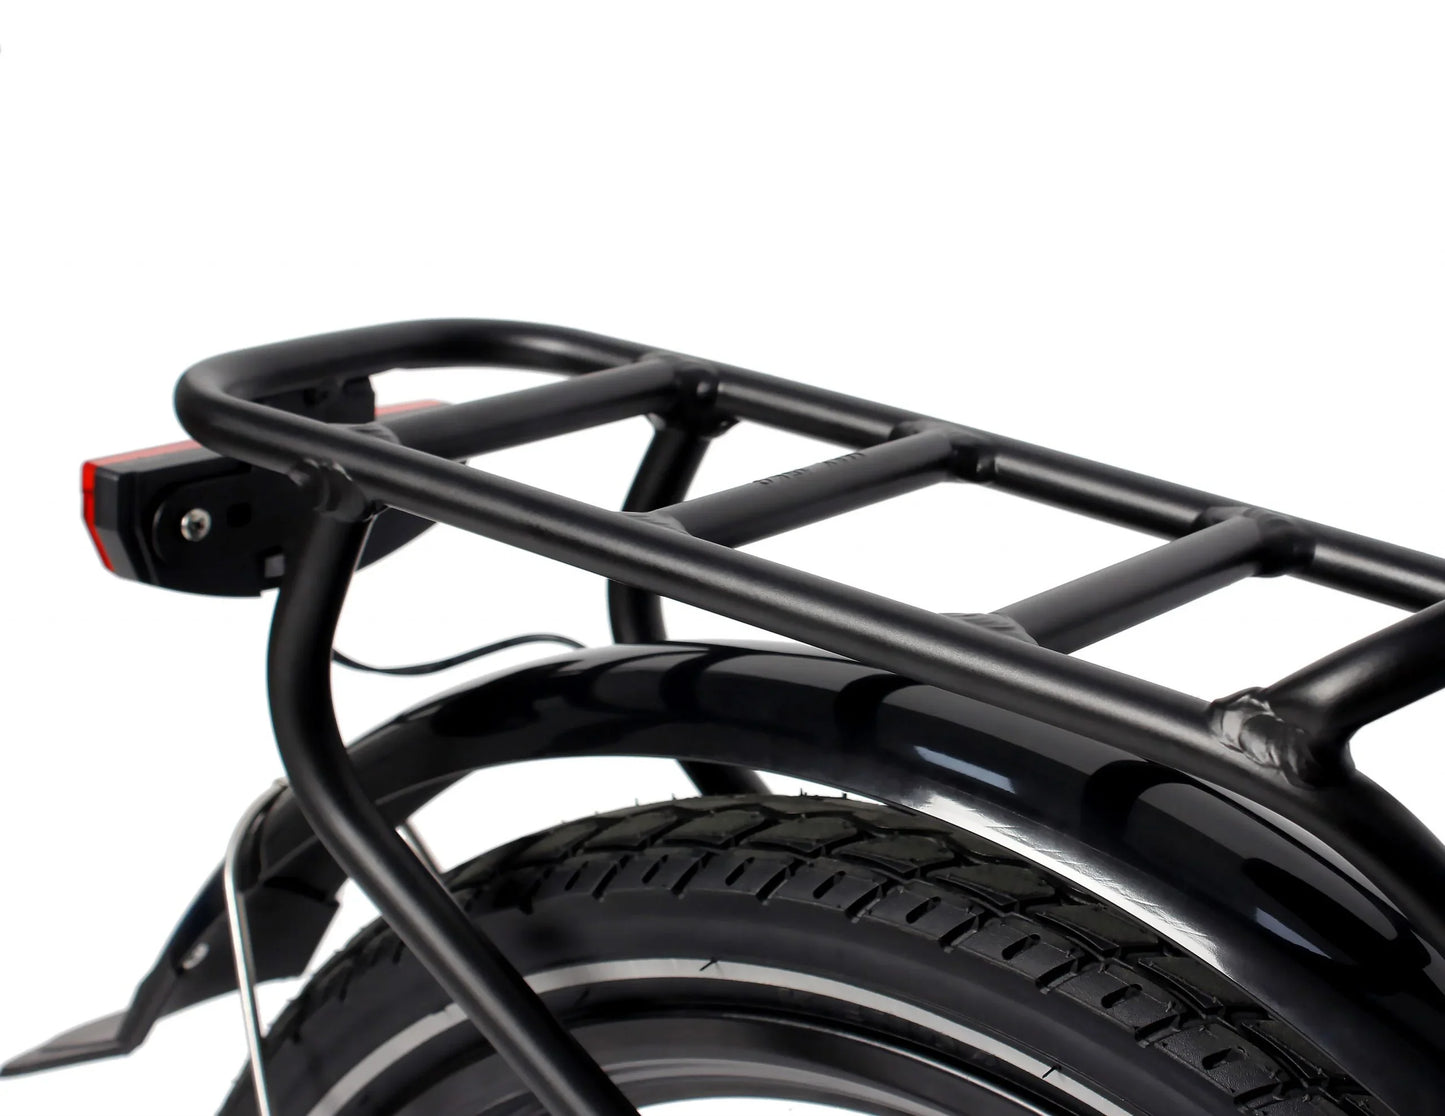 EPIK SWAN Electric Folding Step Through E-Bike (Refurbished)